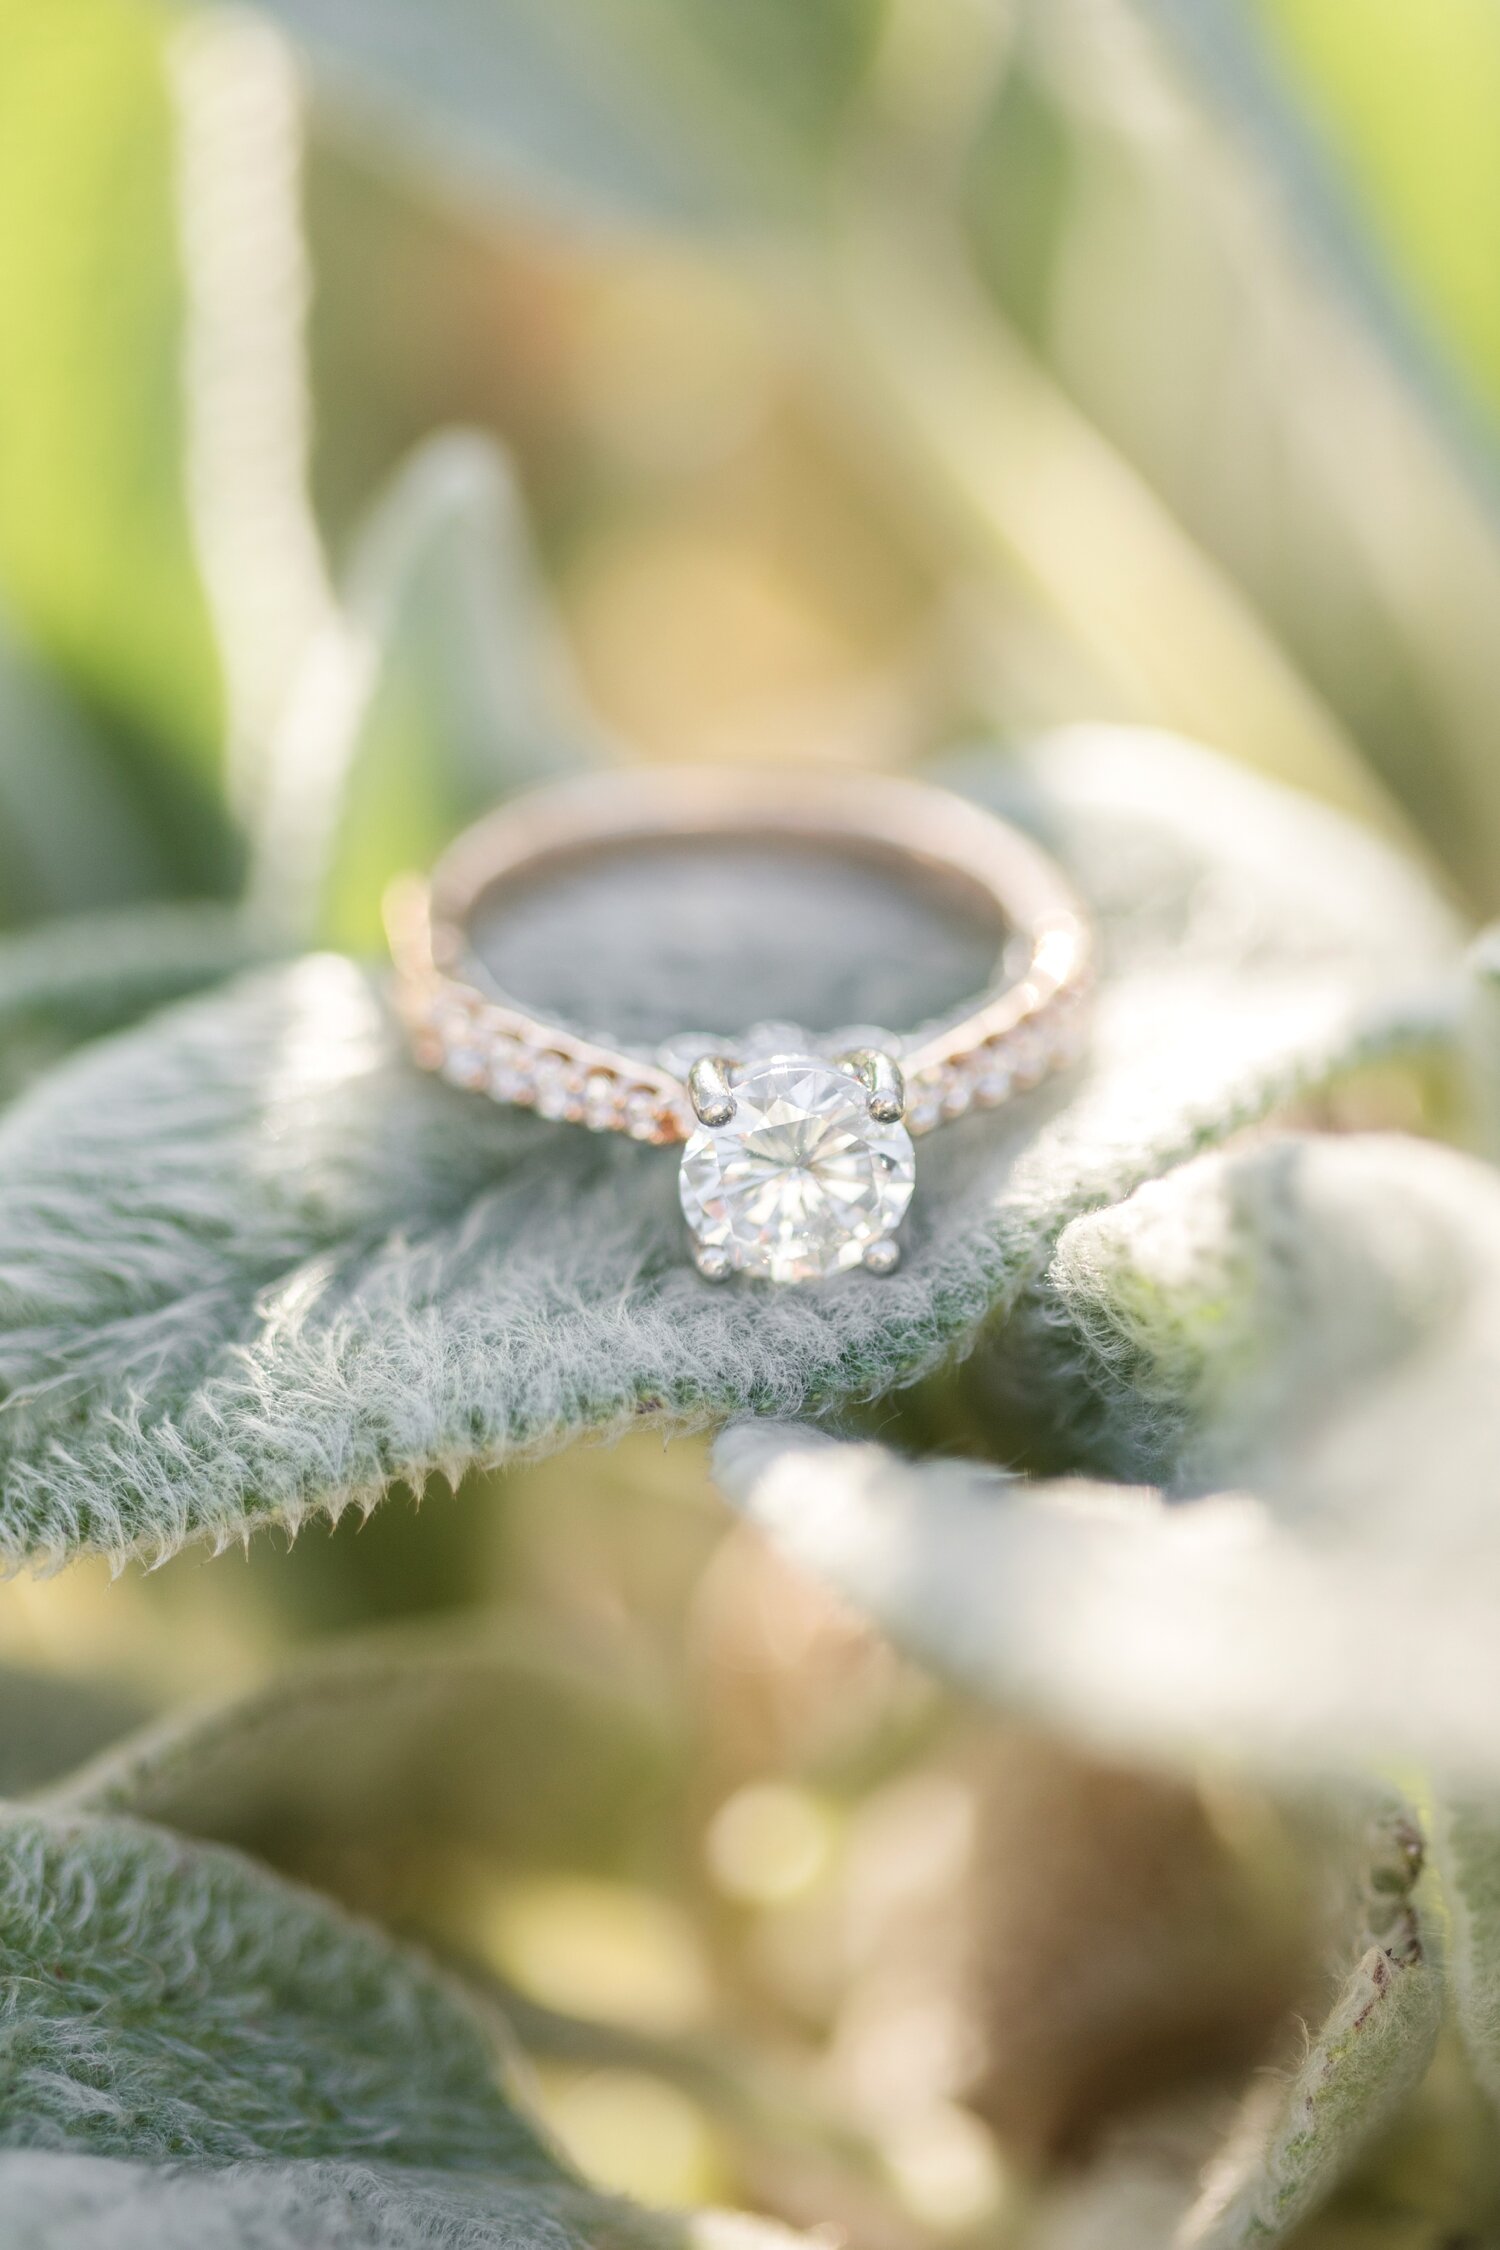  Beautiful heirloom ring!  